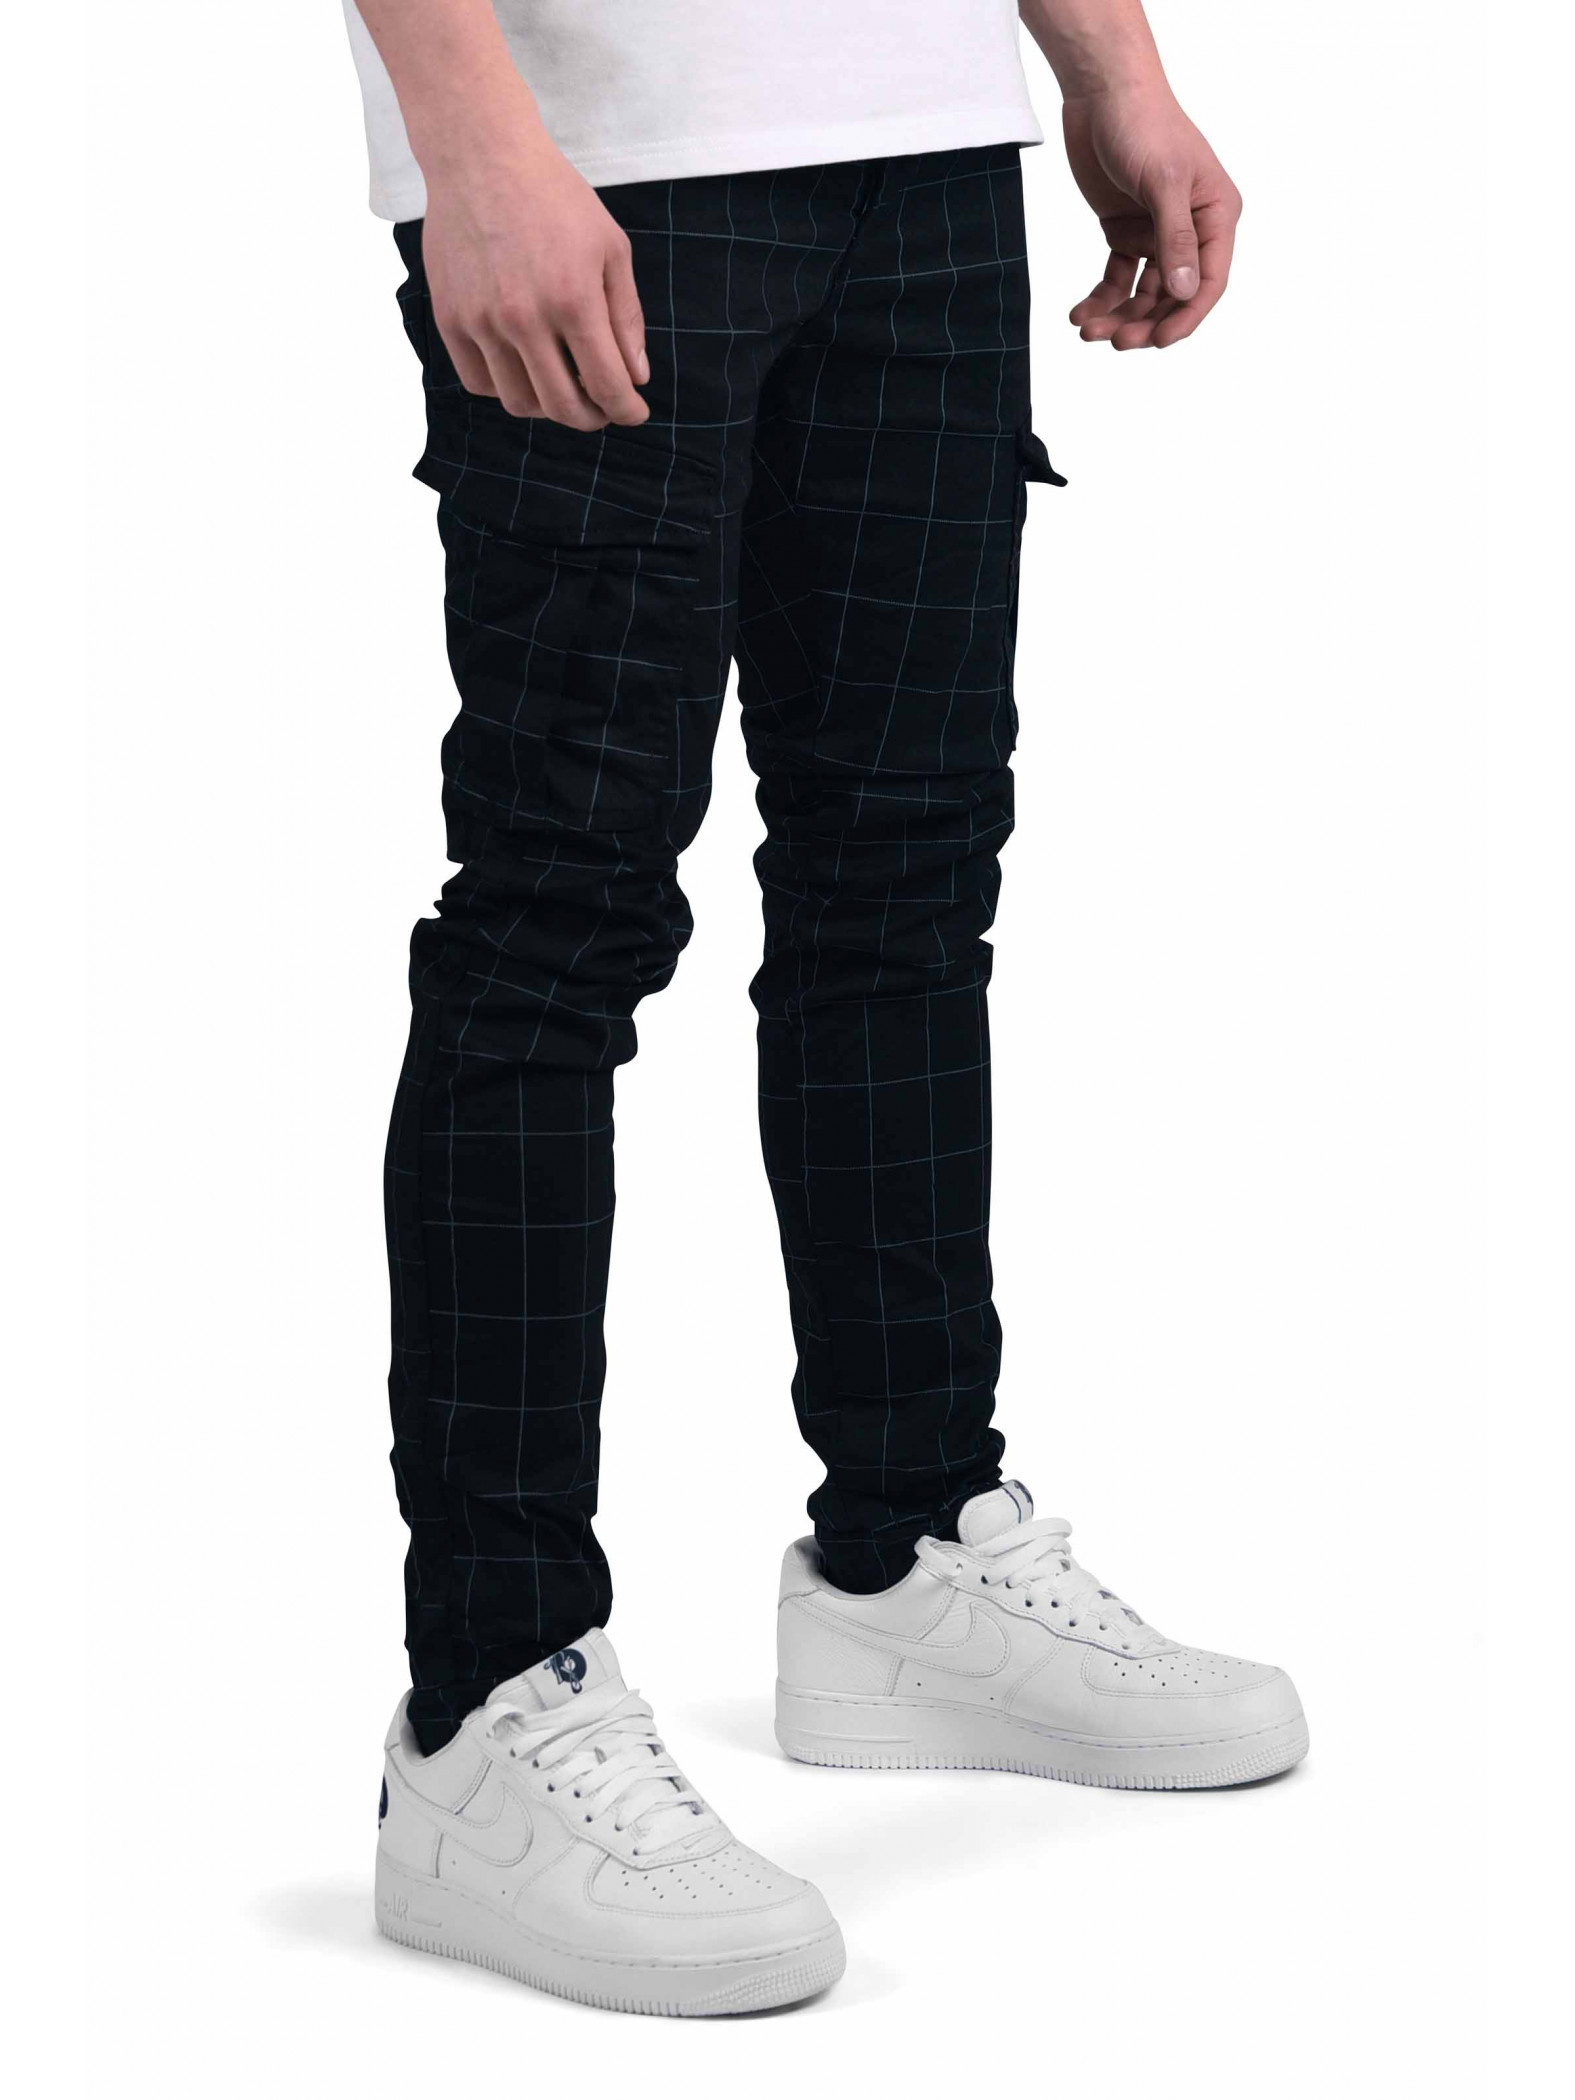 Men's Project X Paris slim fit cargo pants with checks and stripes